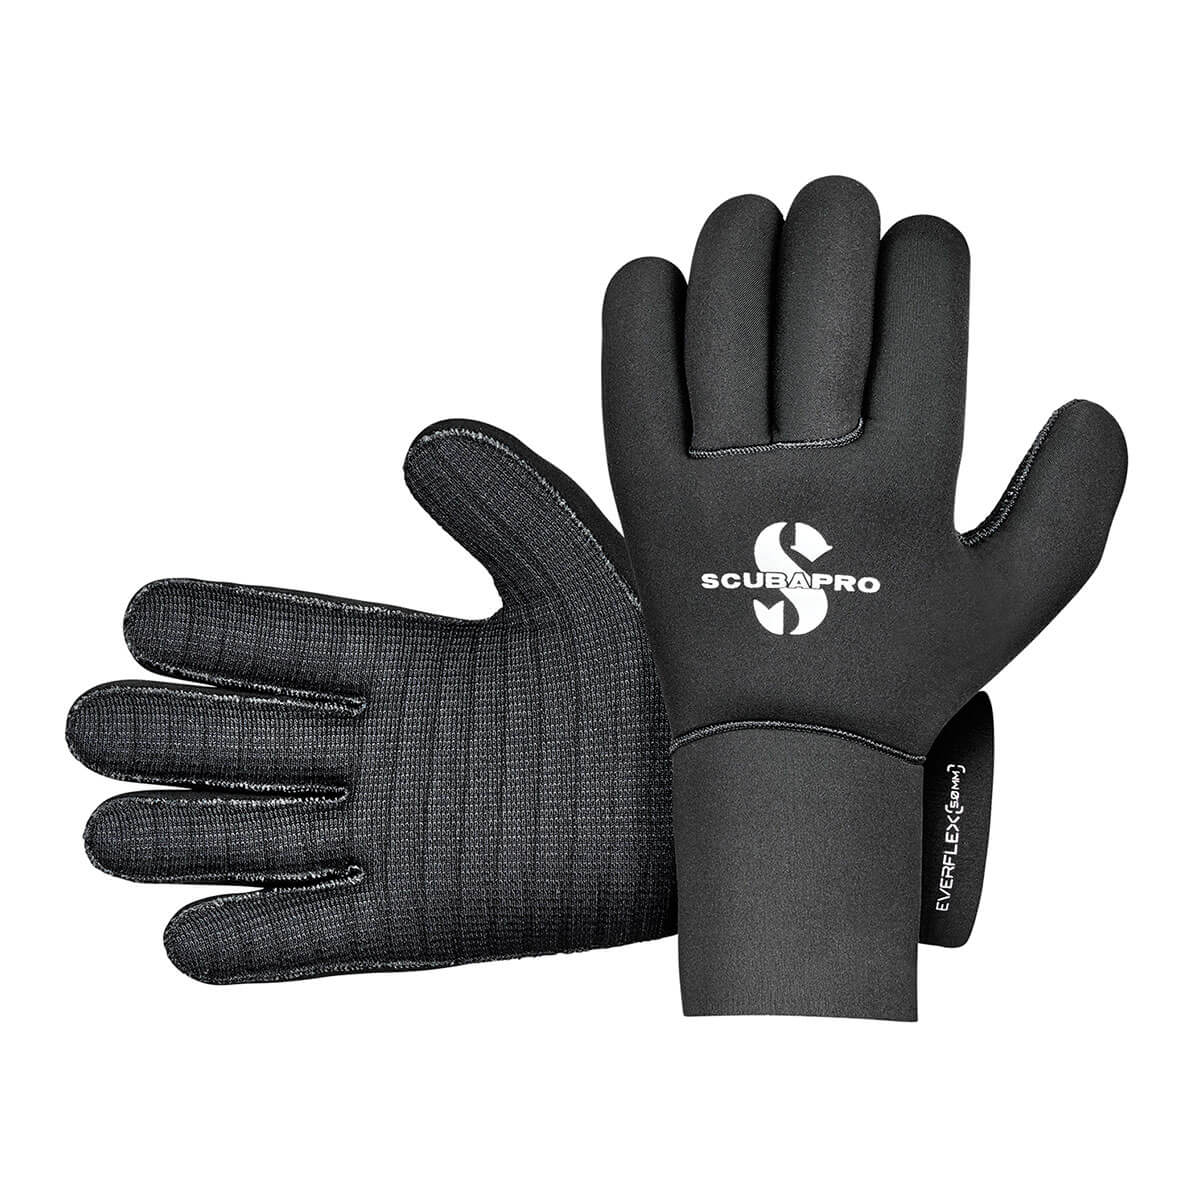 Everflex Gloves